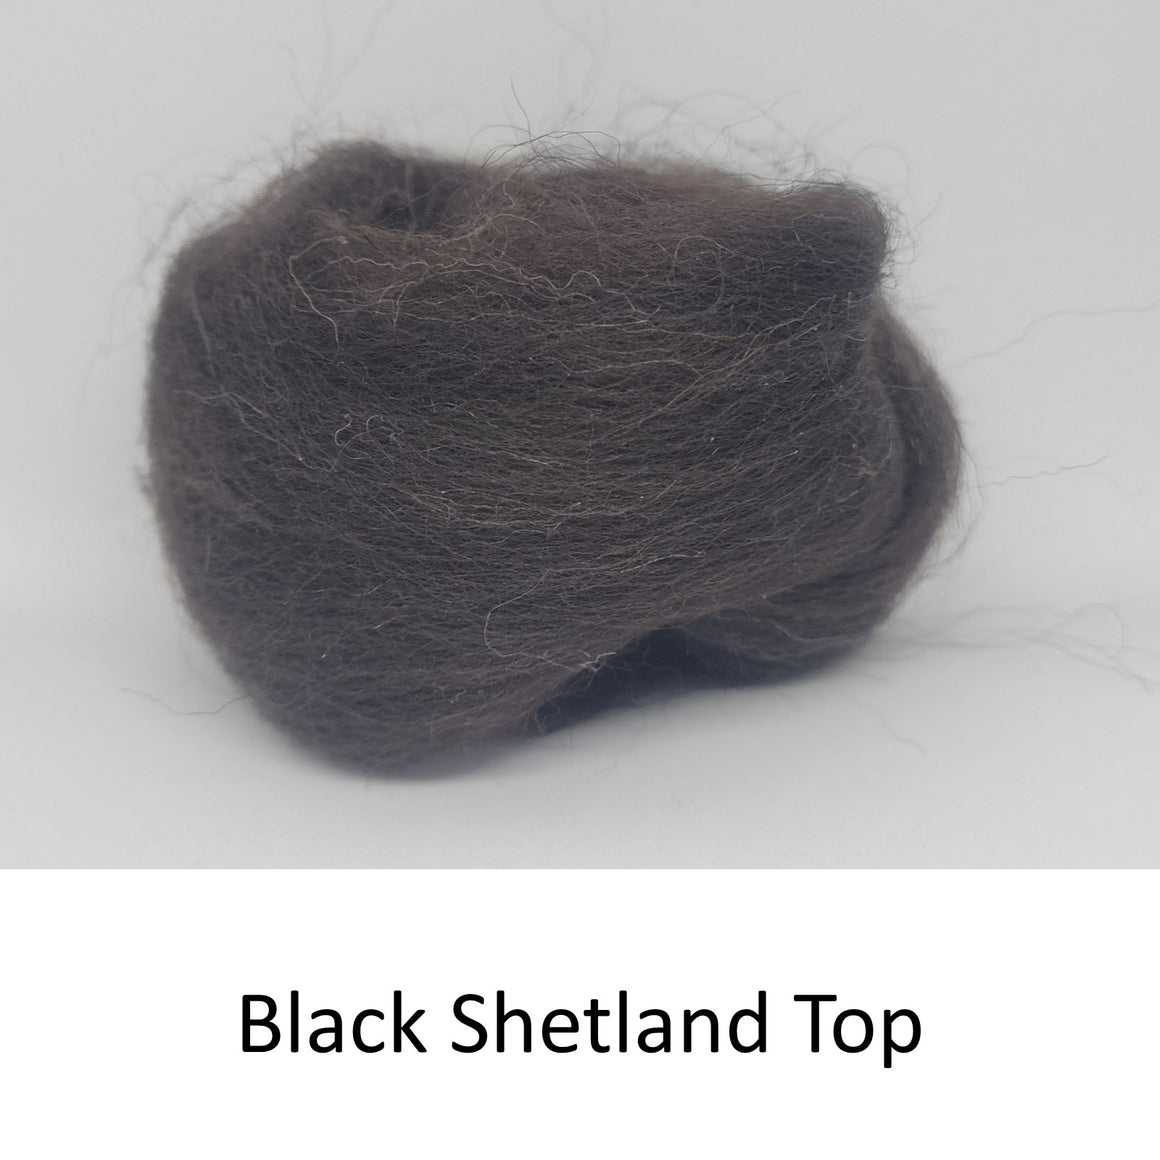 Black Shetland Top